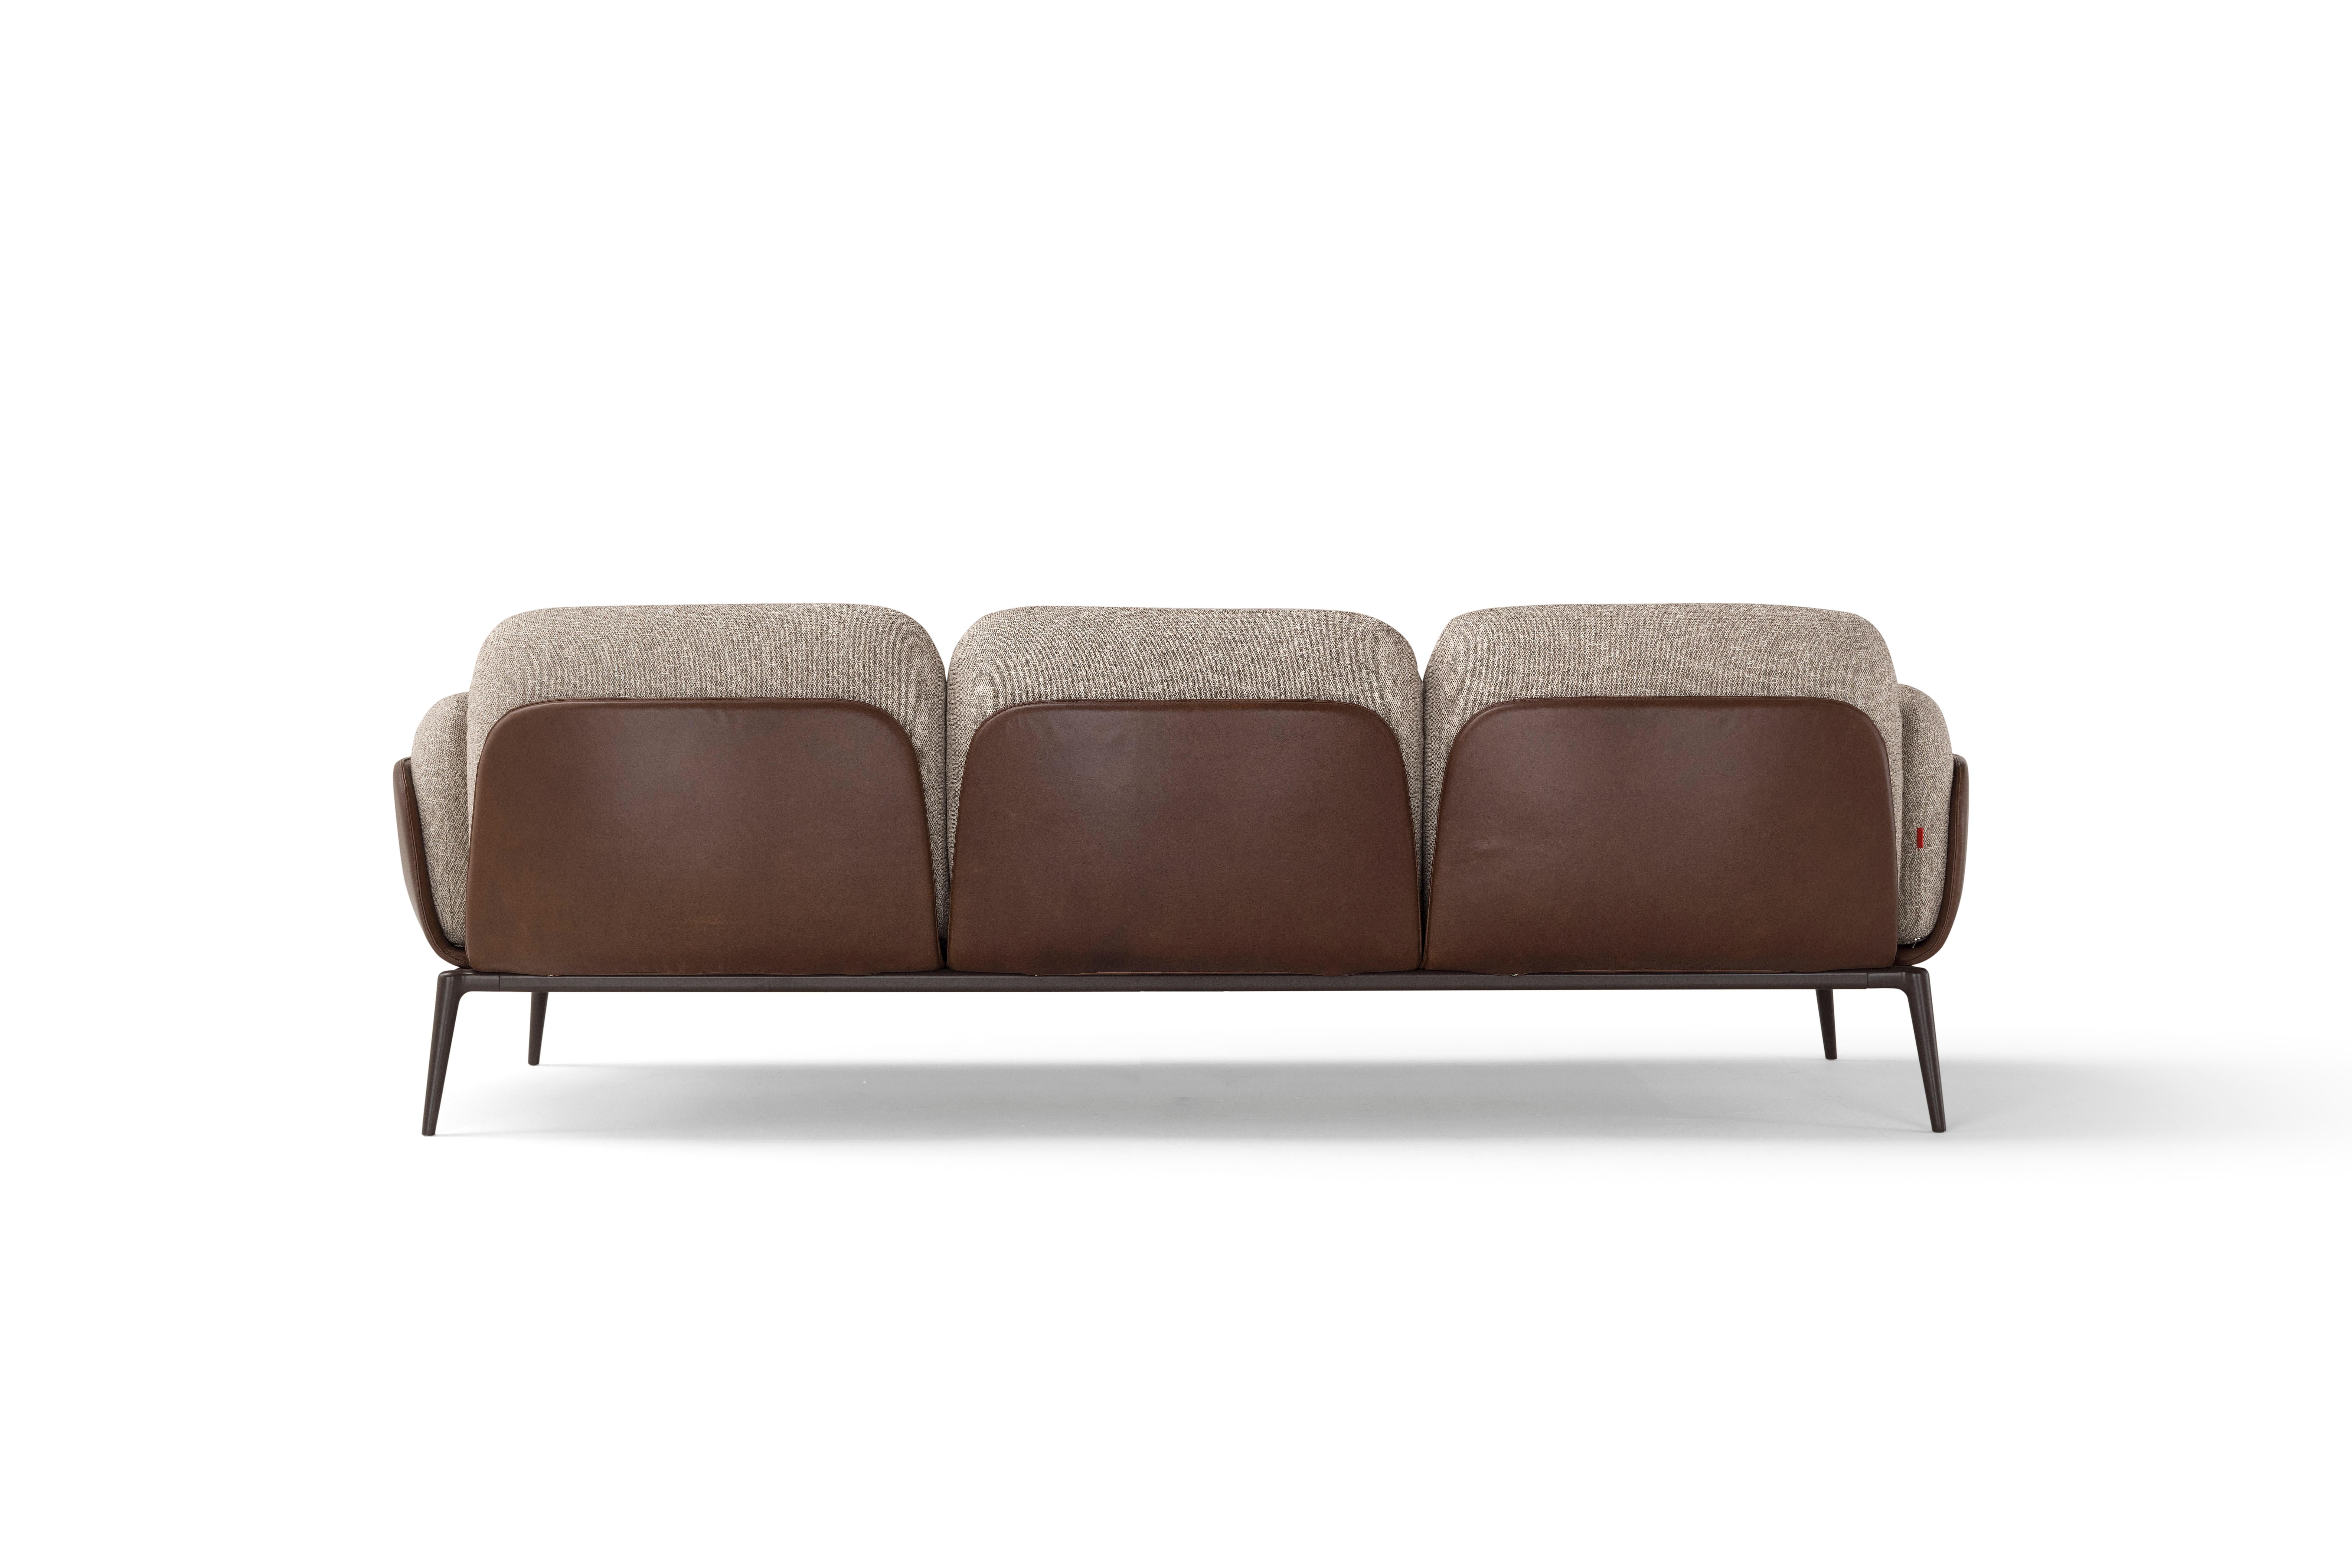 Modern Amura 'Brooklyn' Sofa in Oatmeal and Leather by Stefano Bigi For Sale